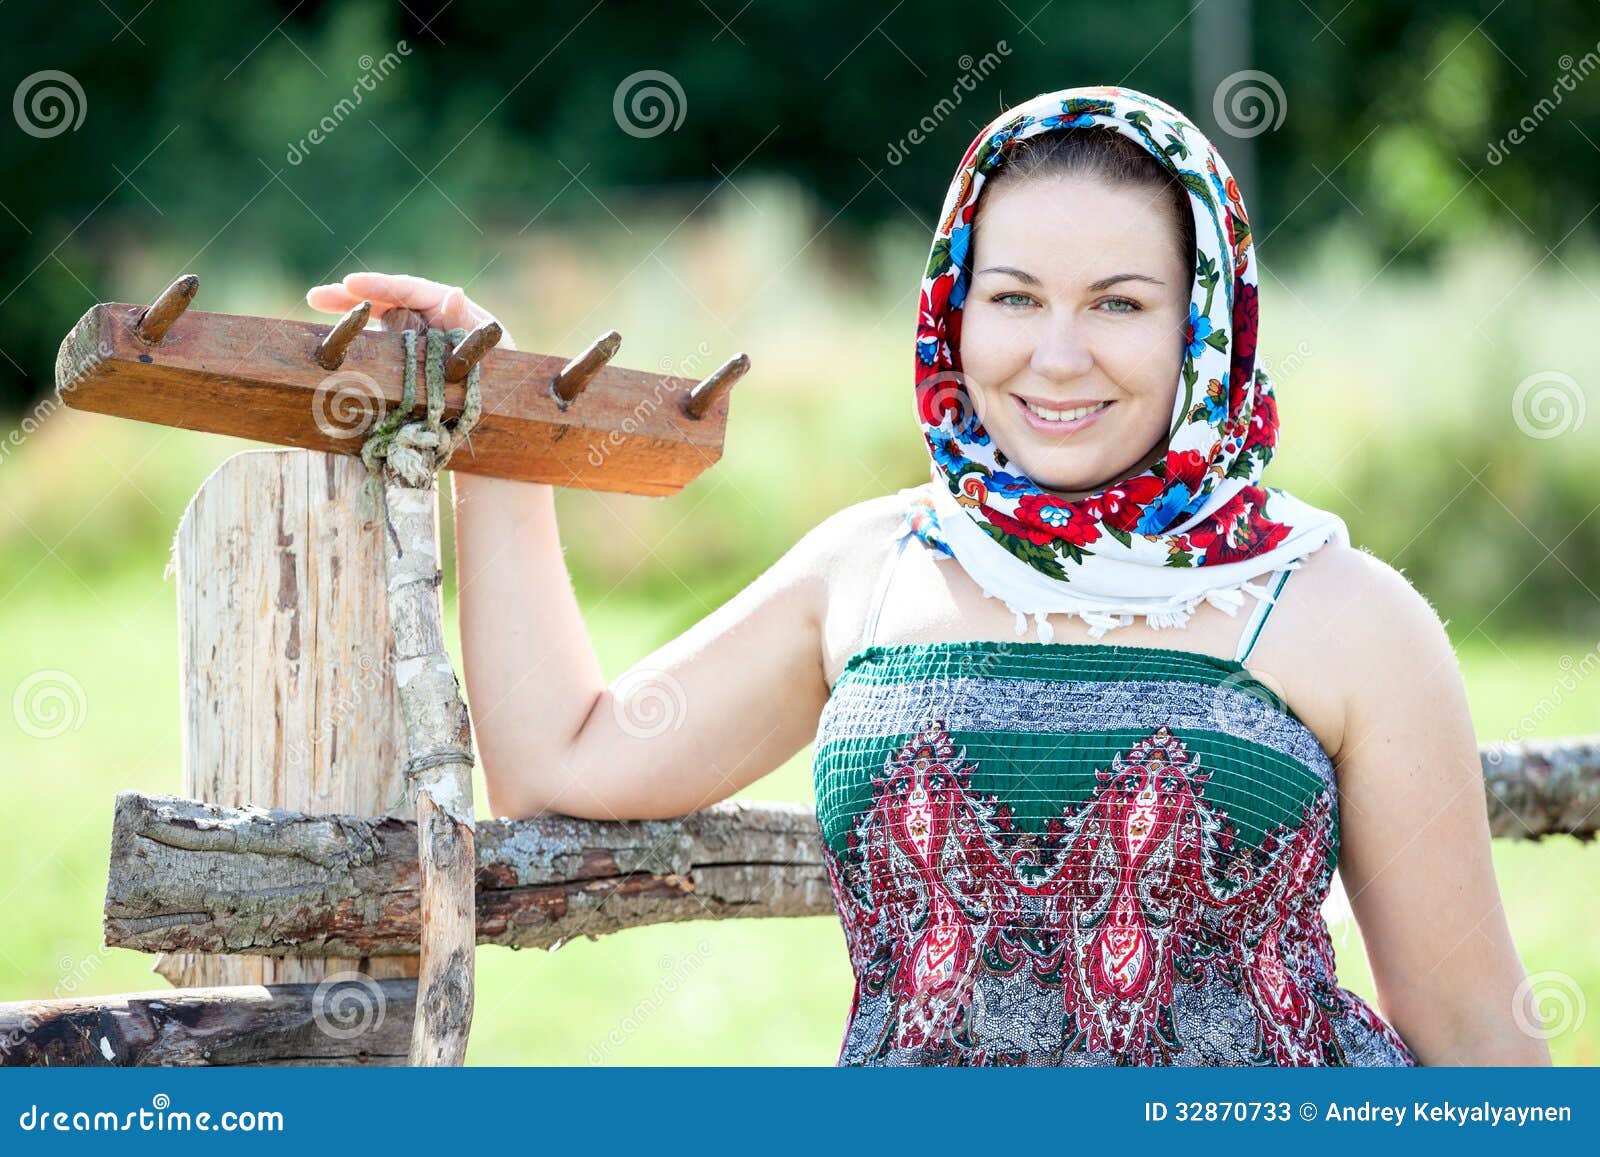 Countrywoman Holding Wooden Rake Stock Image - Image of life, elegance ...